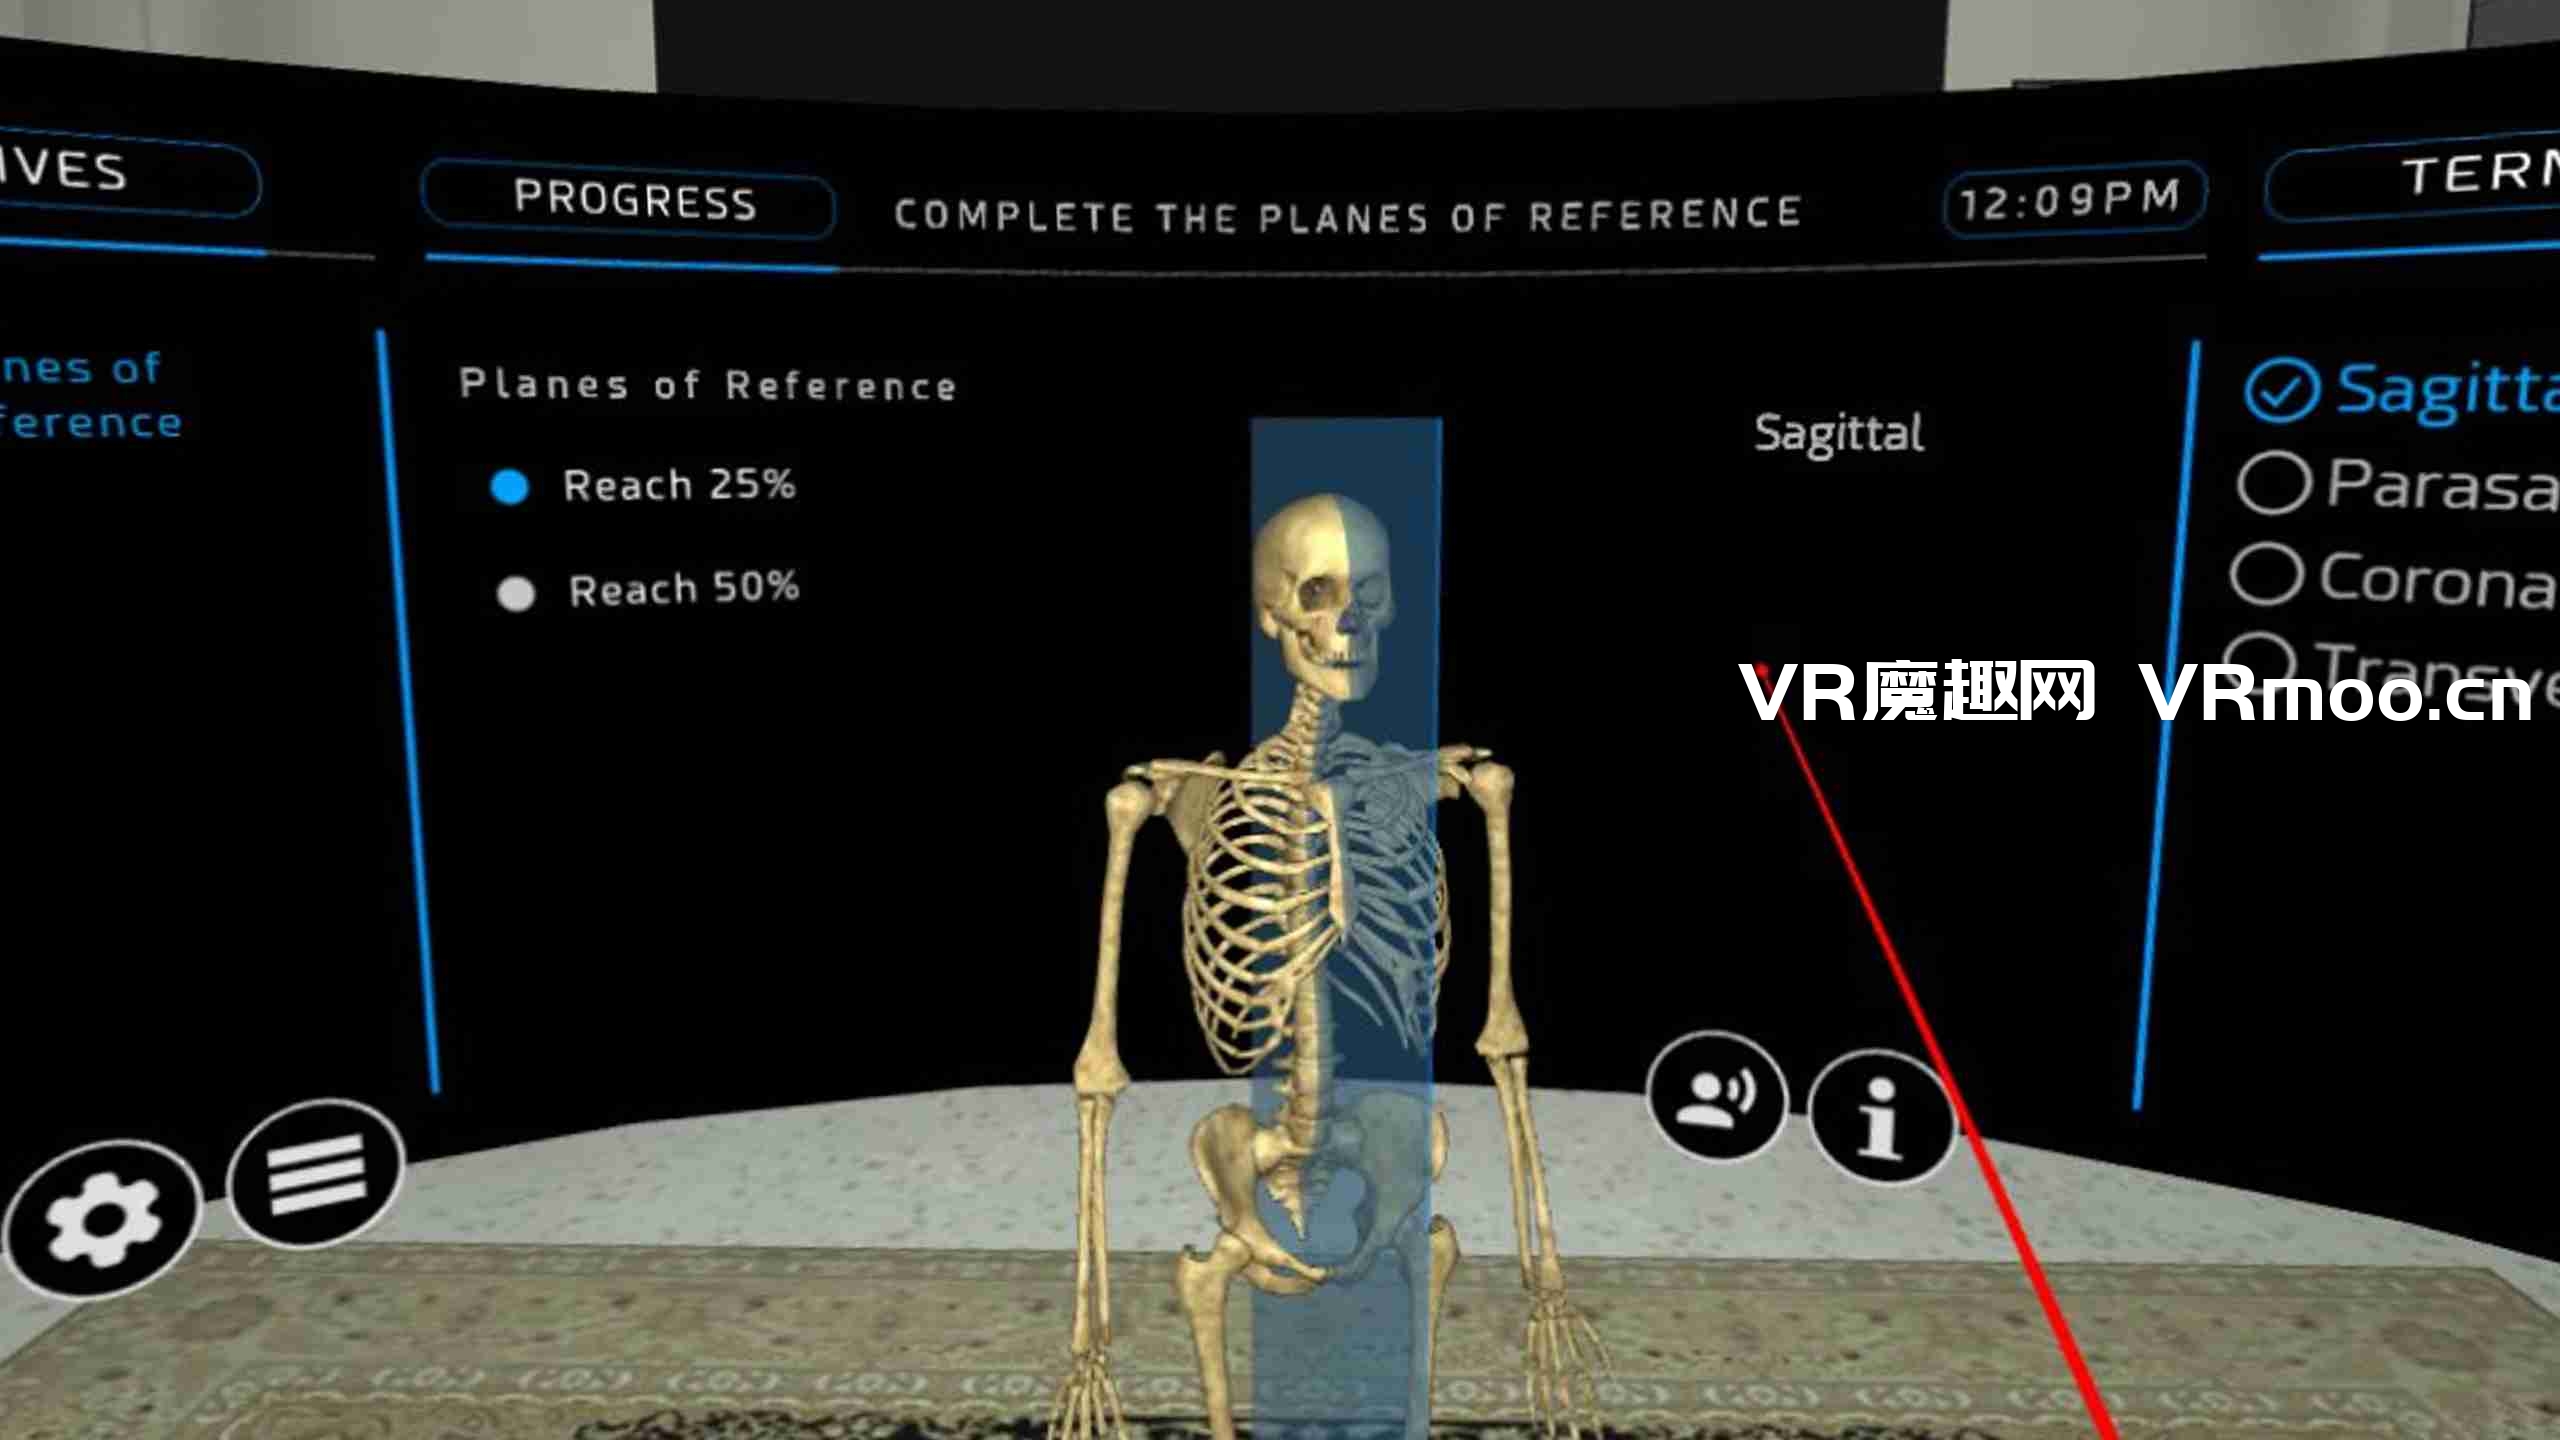 Oculus Quest 游戏《人体骨科 VR》Human Osteology VR